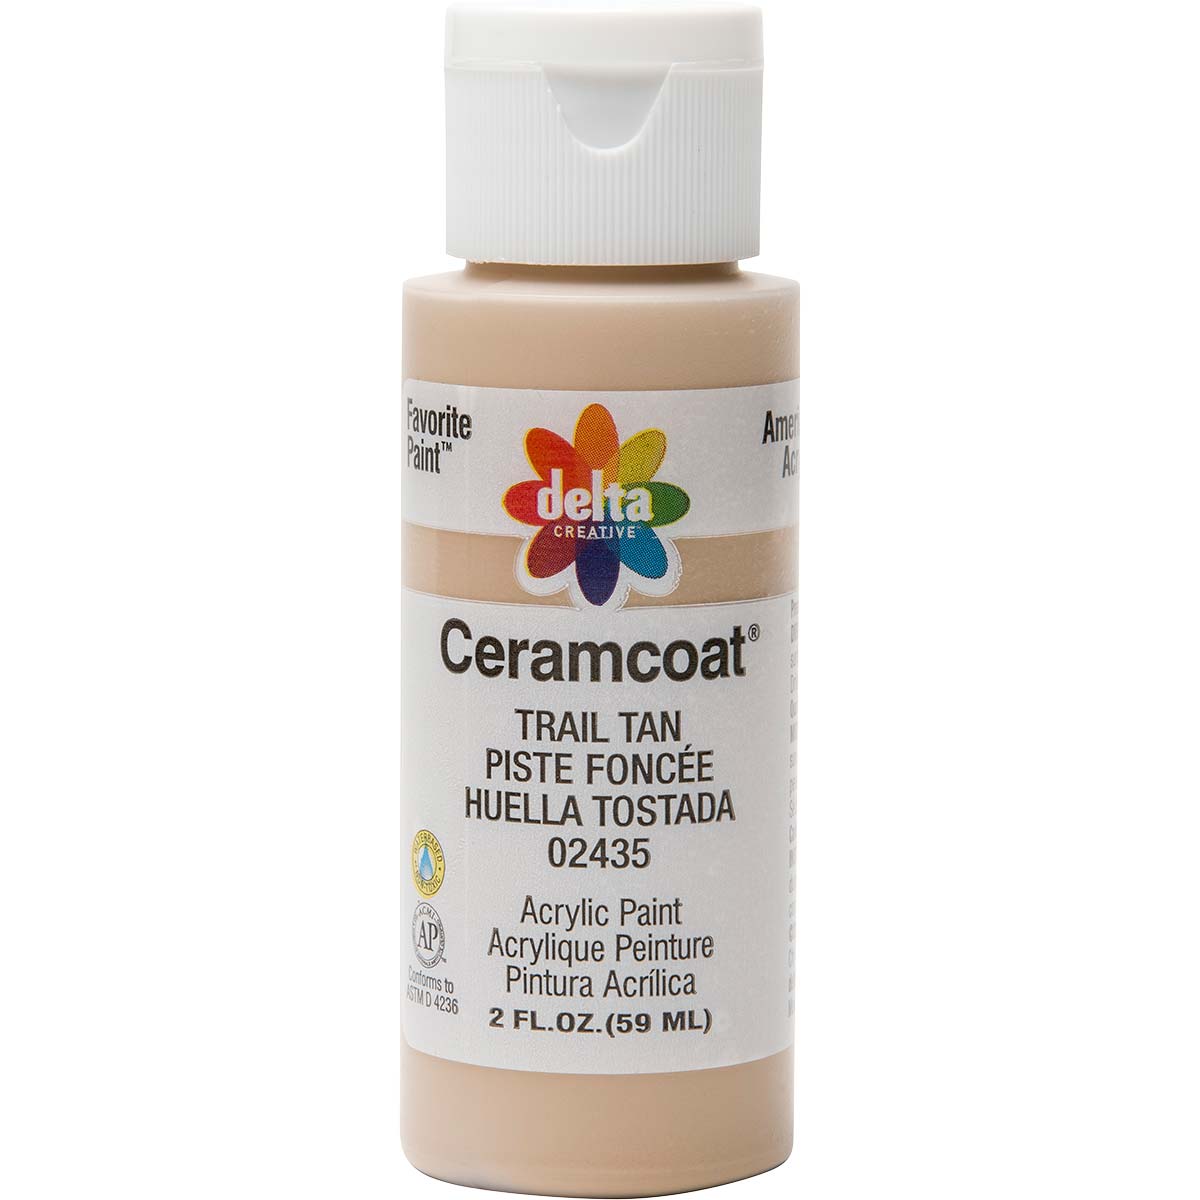 Delta Ceramcoat Acrylic Paint - Trail Tan, 2 oz. - 024350202W